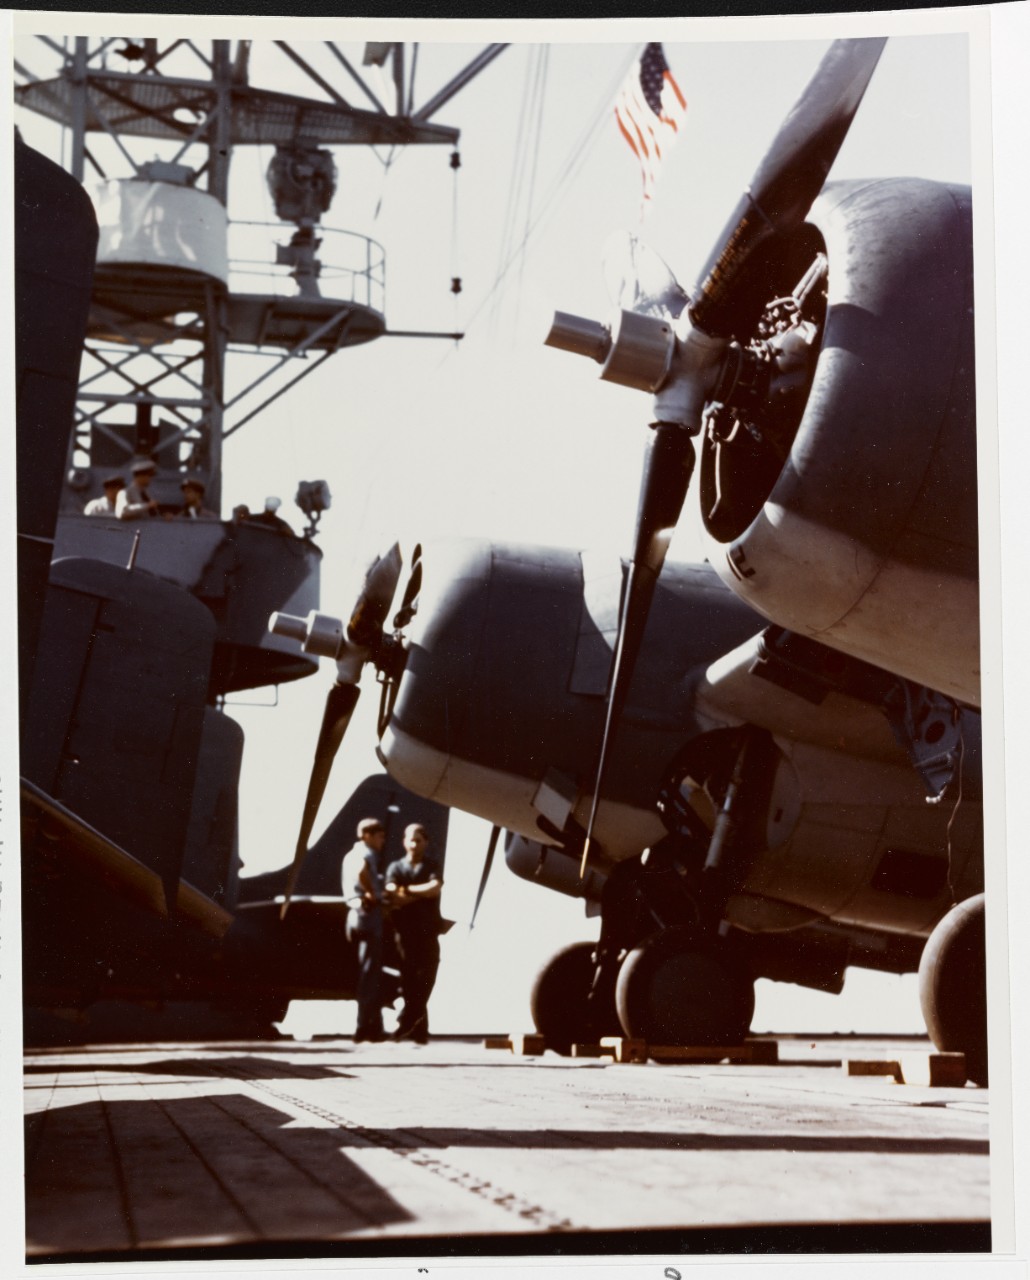 USS SANTEE (ACV-29)